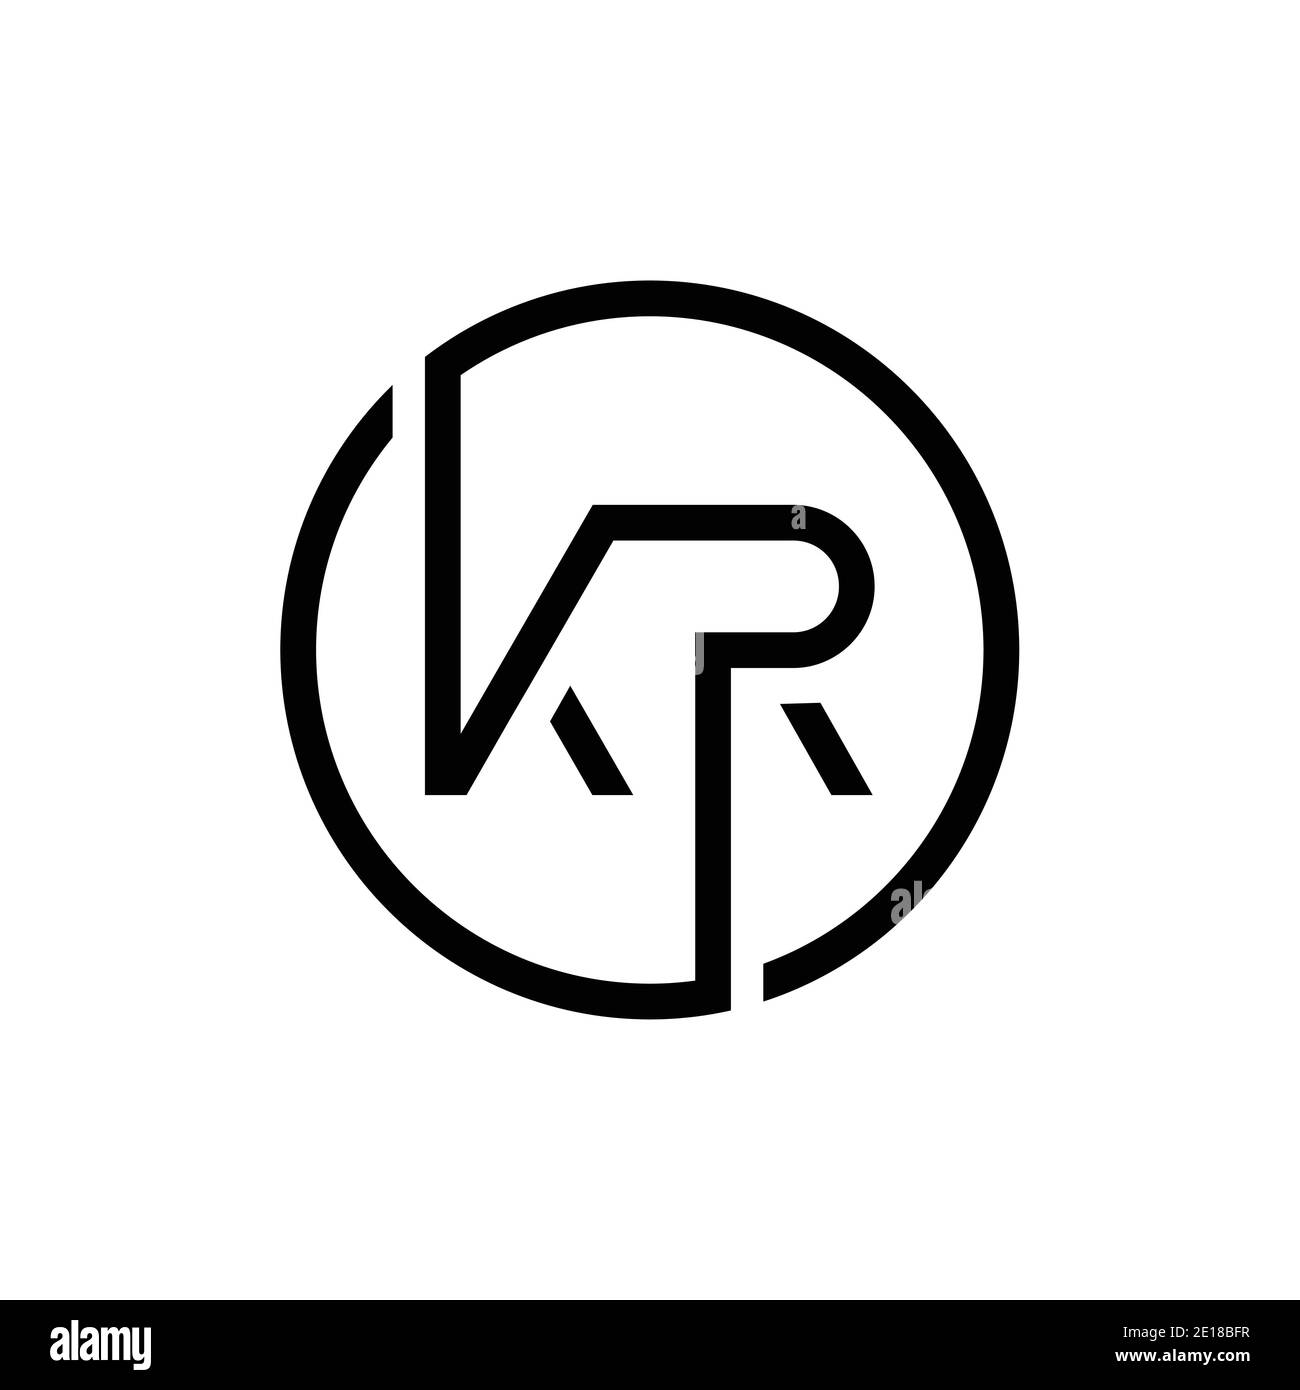 Linked Letter KR Logo Design vector Template. Creative Circle KR Minimal, Flat Logo Design Vector Illustration Stock Vector